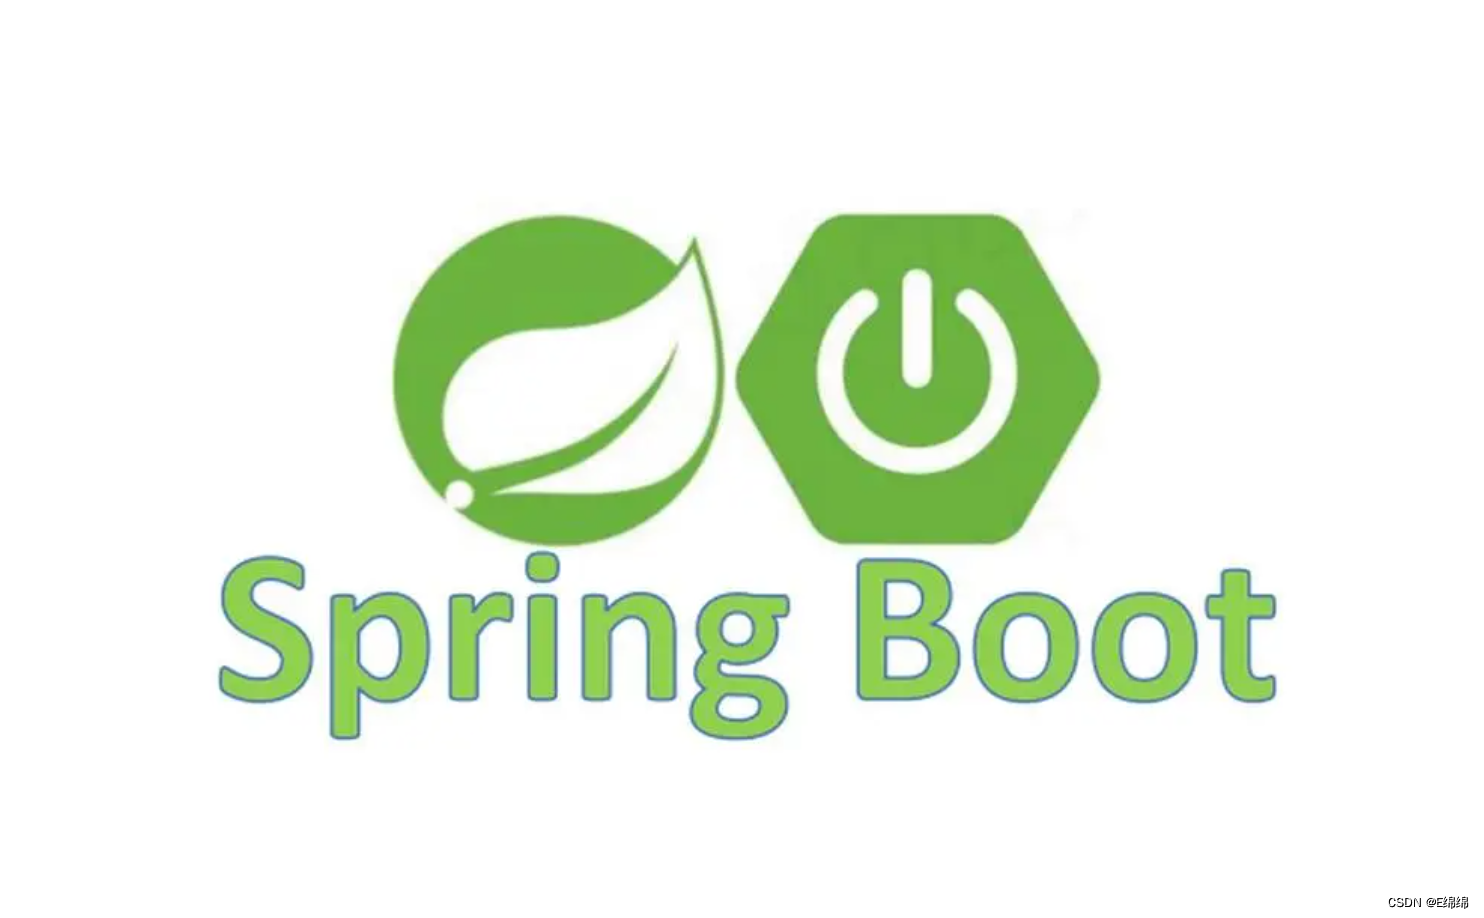 SpringBoot：集成机器学习模型进行预测和分析